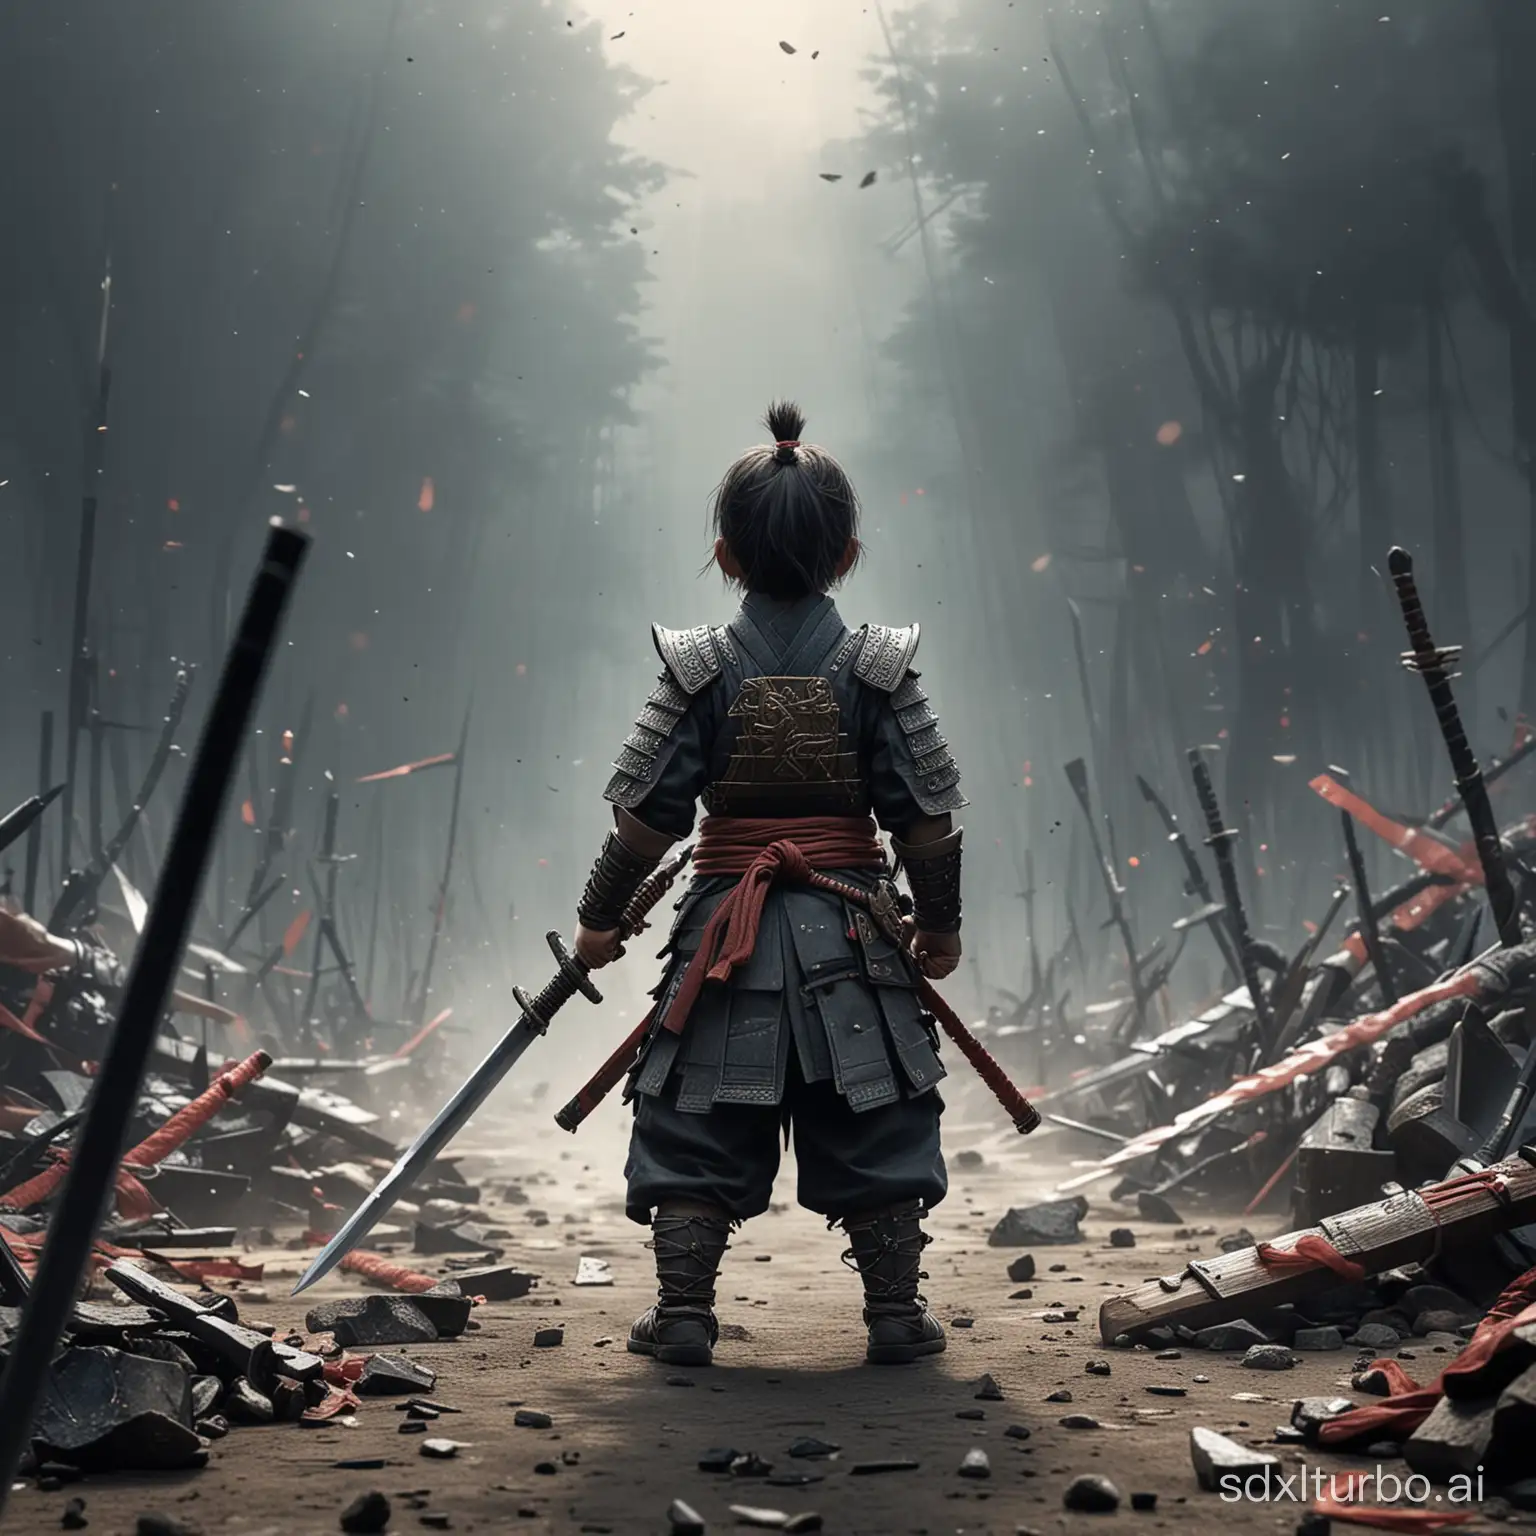 Fearless-Child-Samurai-Warrior-Amidst-Battle-Chaos